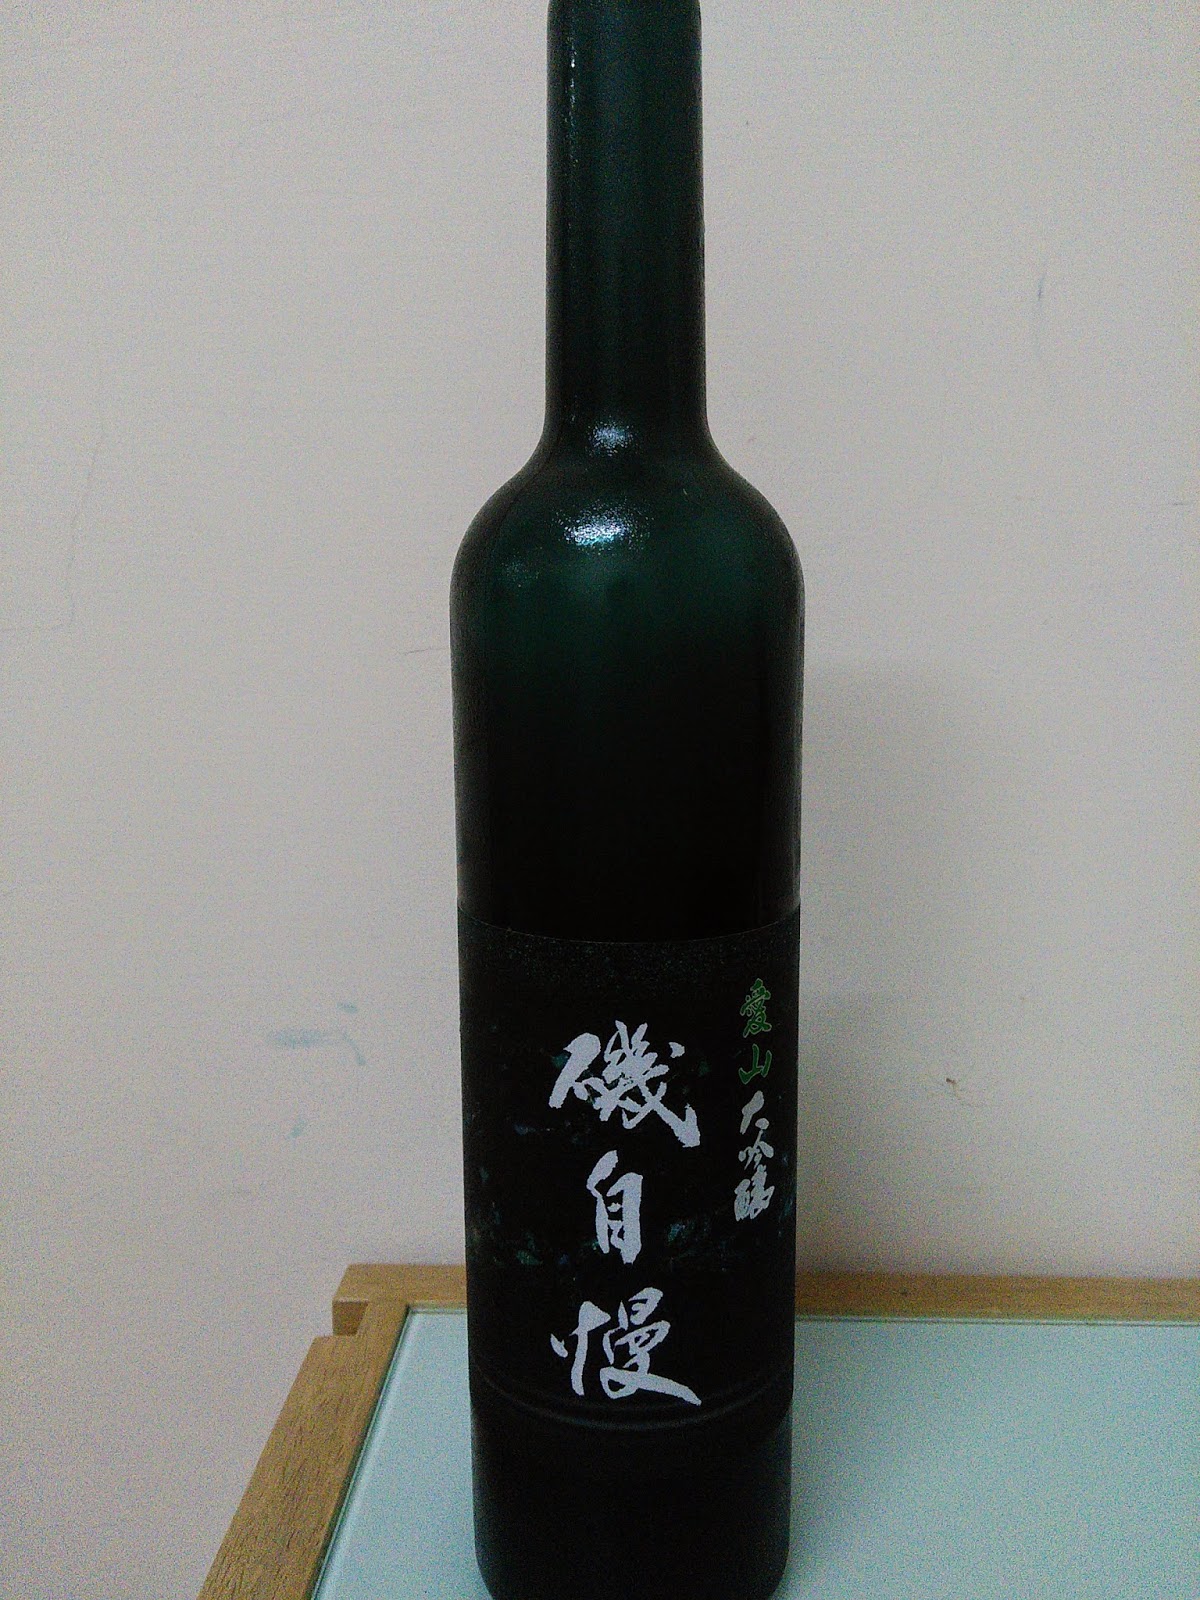 Roger's Sake, A Midway toward the Sake 清酒の途中: 磯自慢酒造 愛山 大吟釀